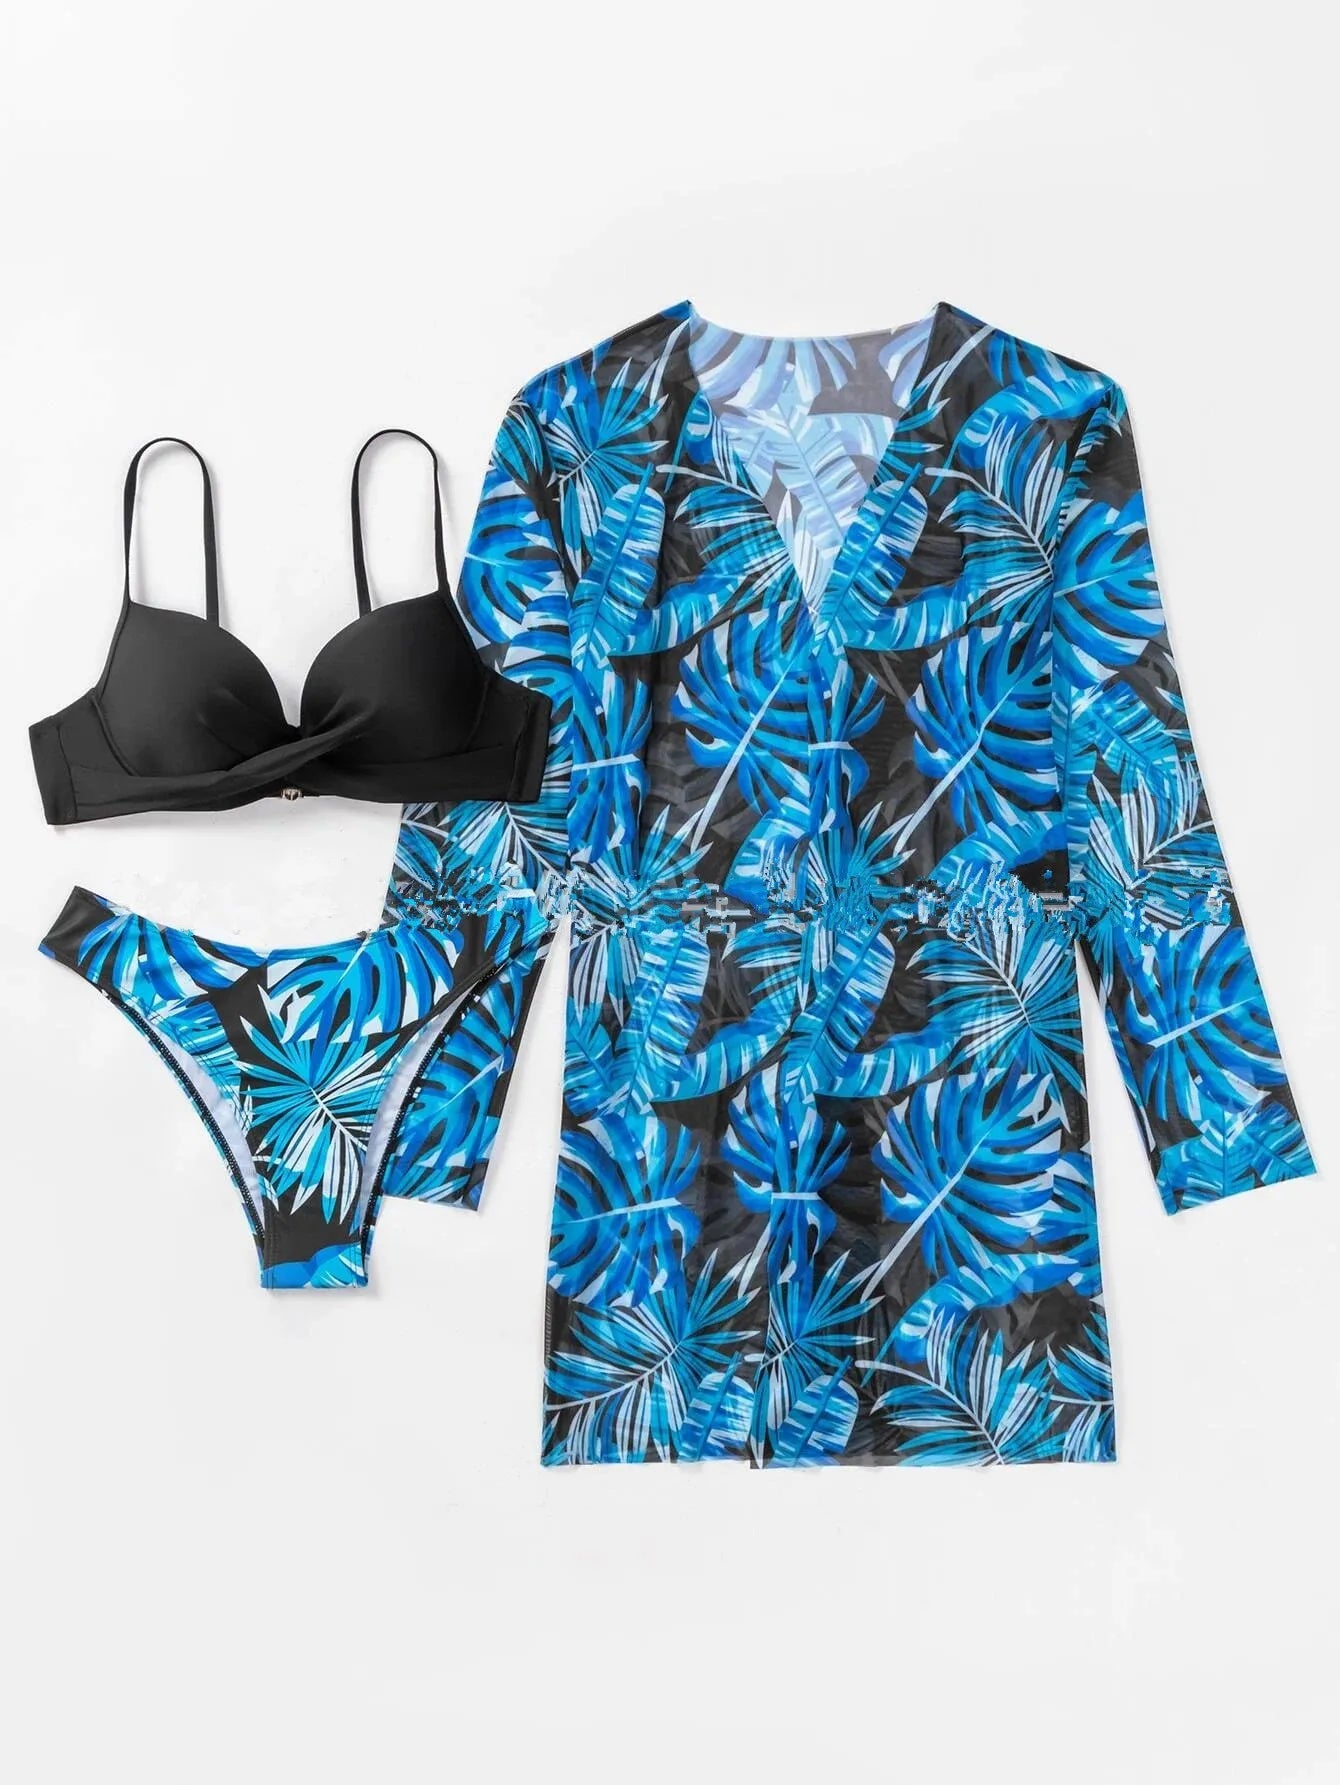 3 Pieces Swimsuit Bikini Set+Long Sleeve Shirt Cover-Up